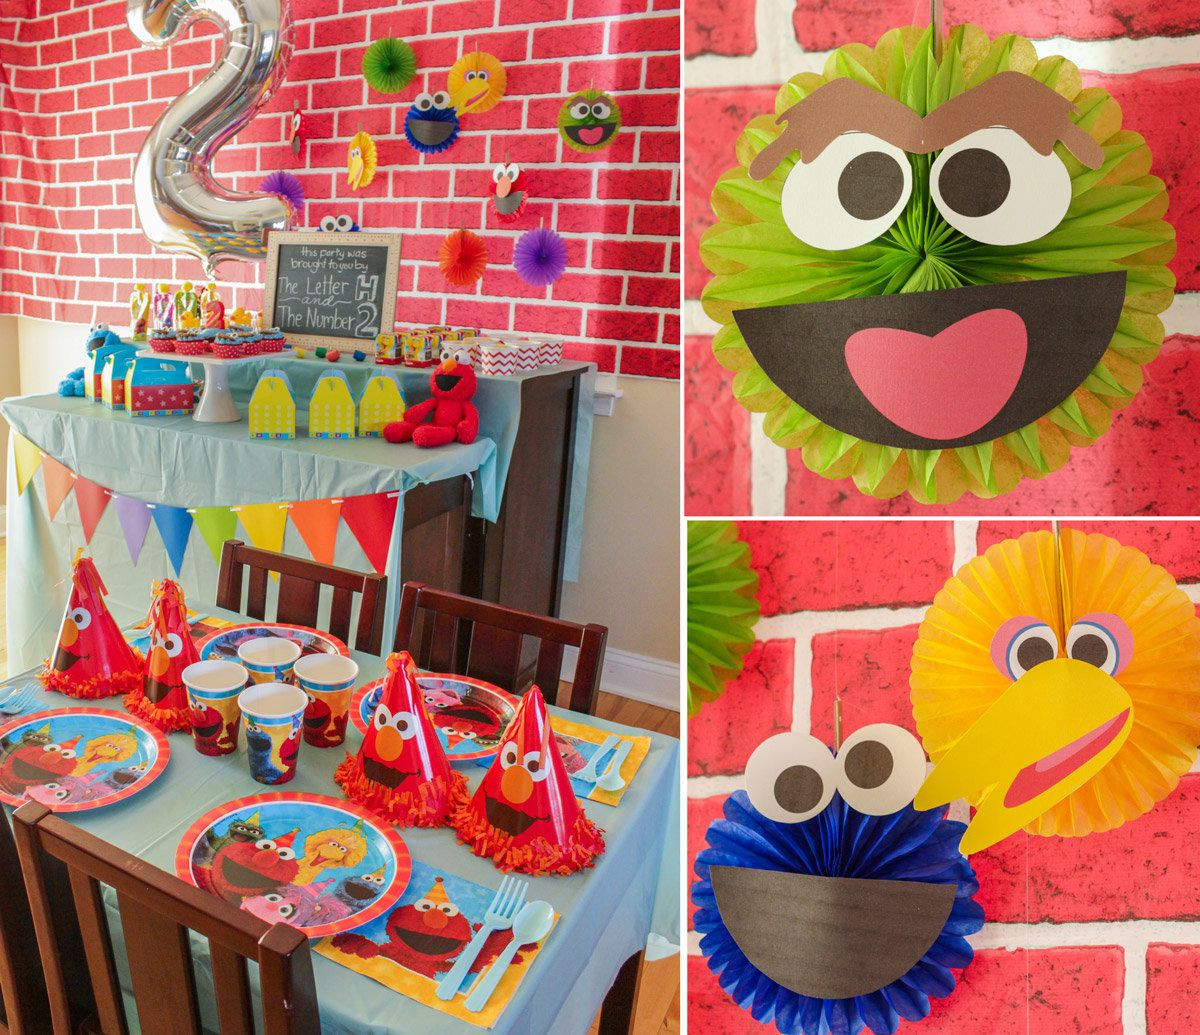 Sesame Street Birthday Party Decorations
 Sesame Street Party Ideas